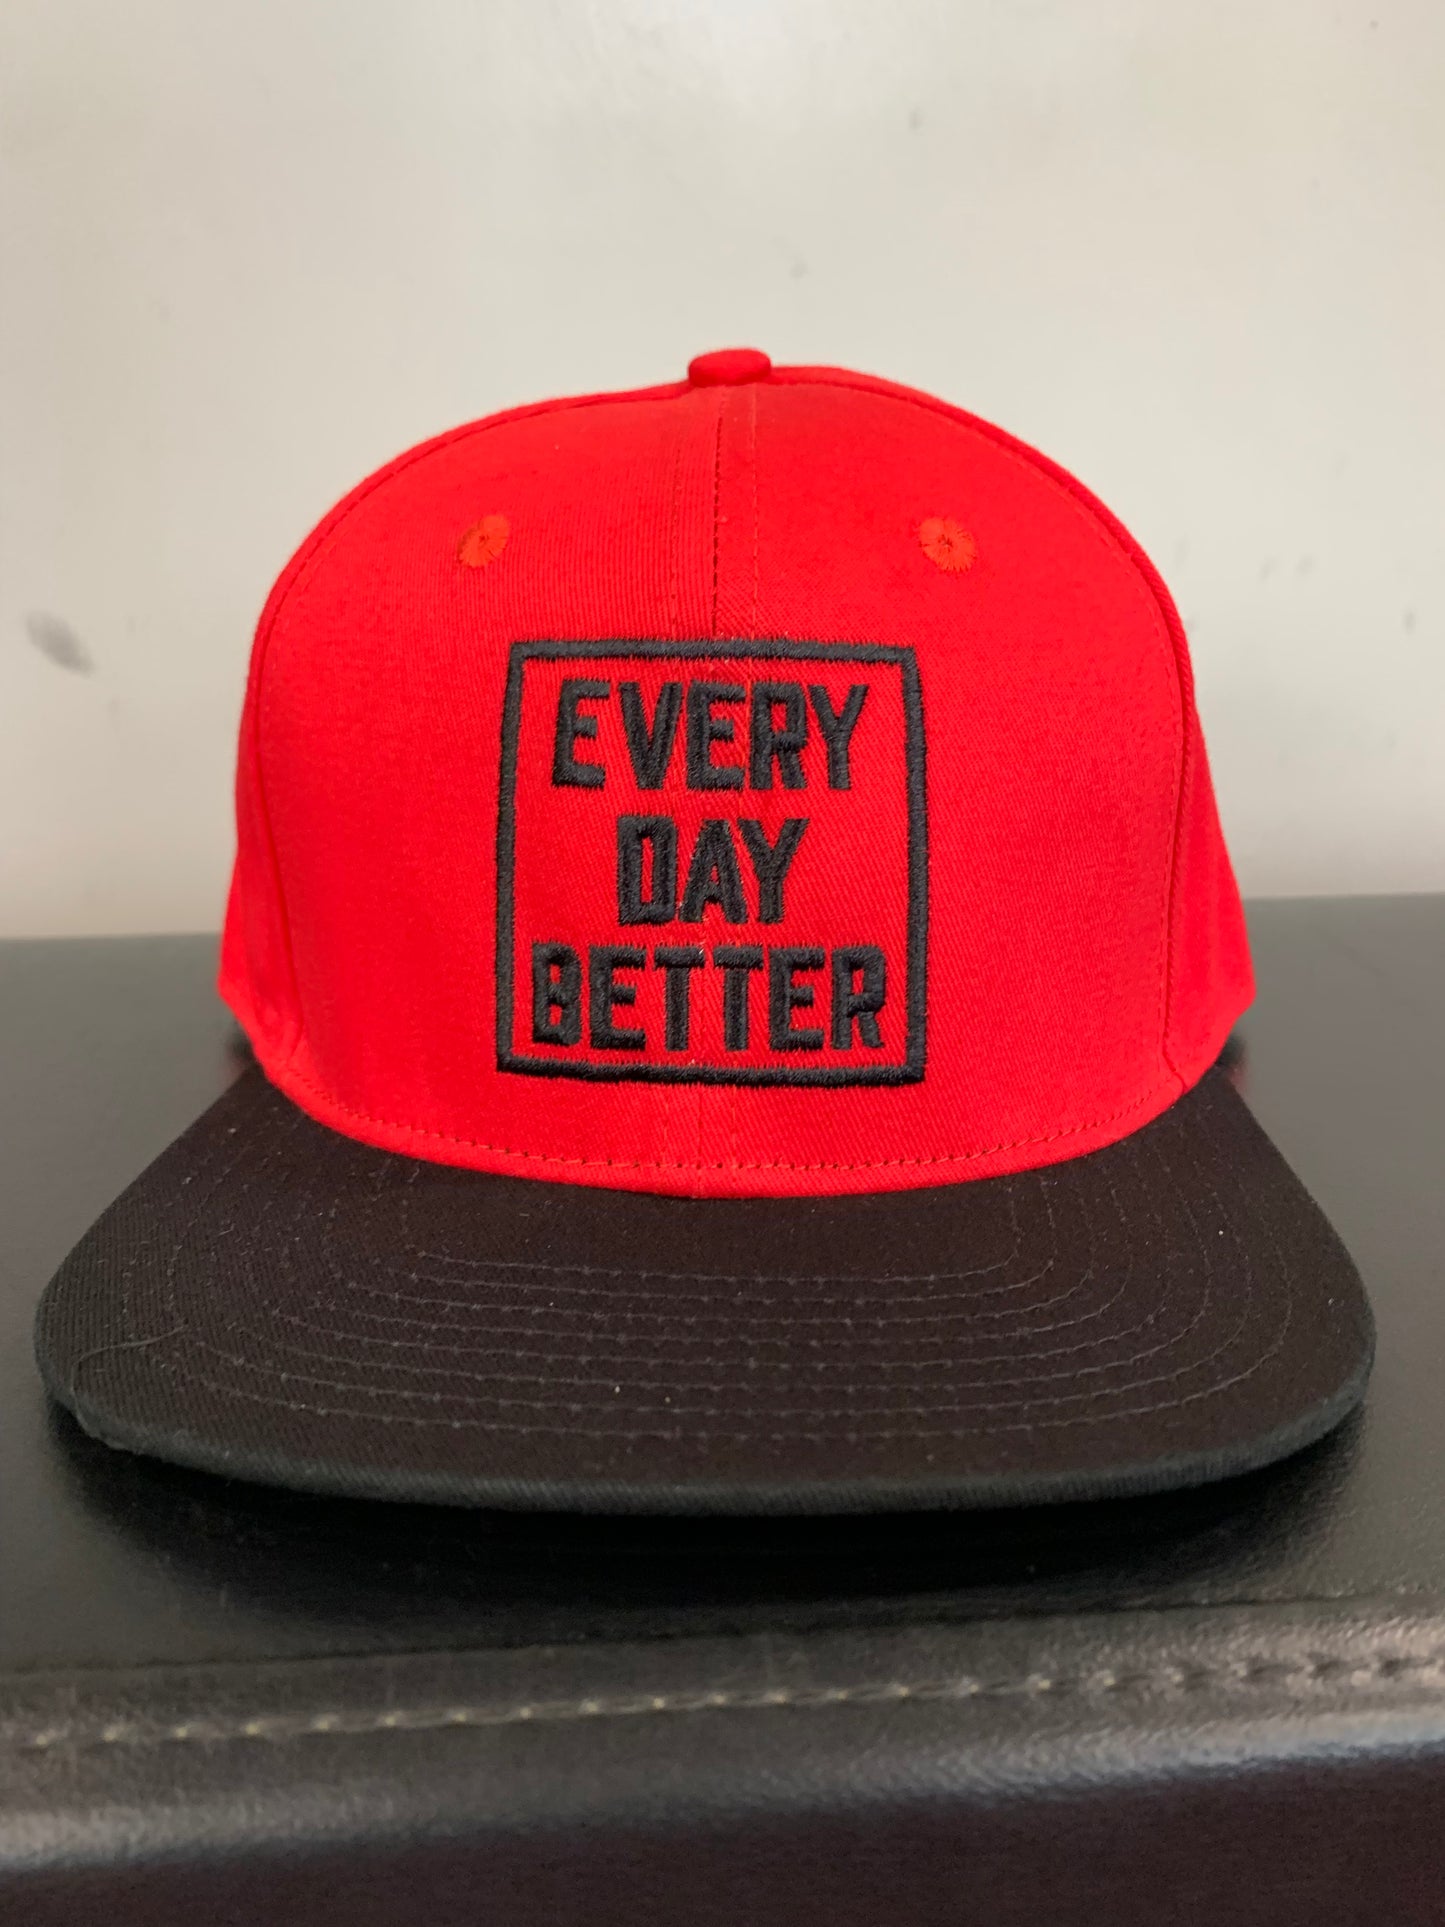 Red/Black BOX LOGO snapback hat